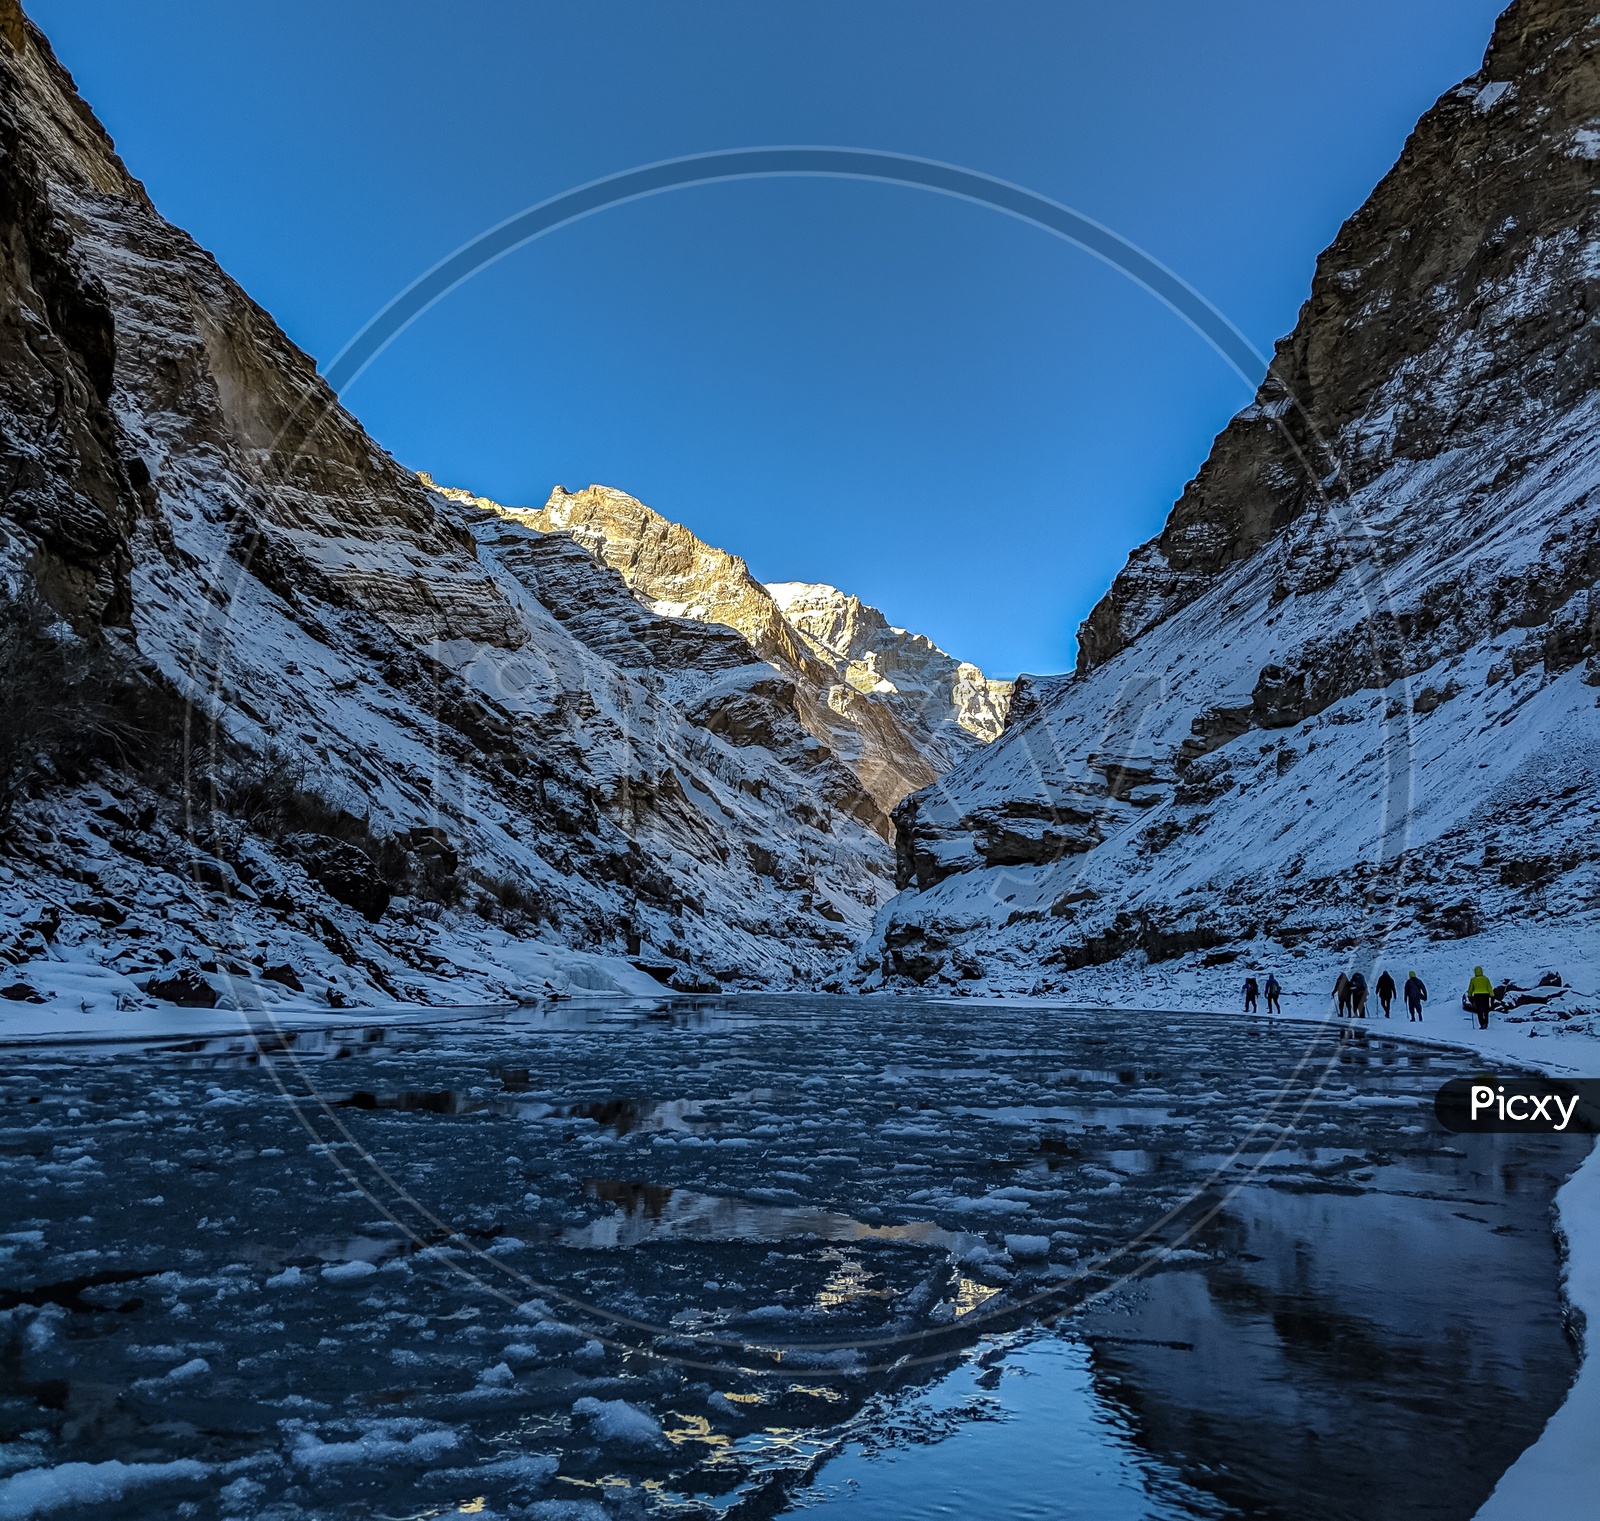 Adventurers  Or Men Walking On The Frozen Ice of River Zanskar  Valley